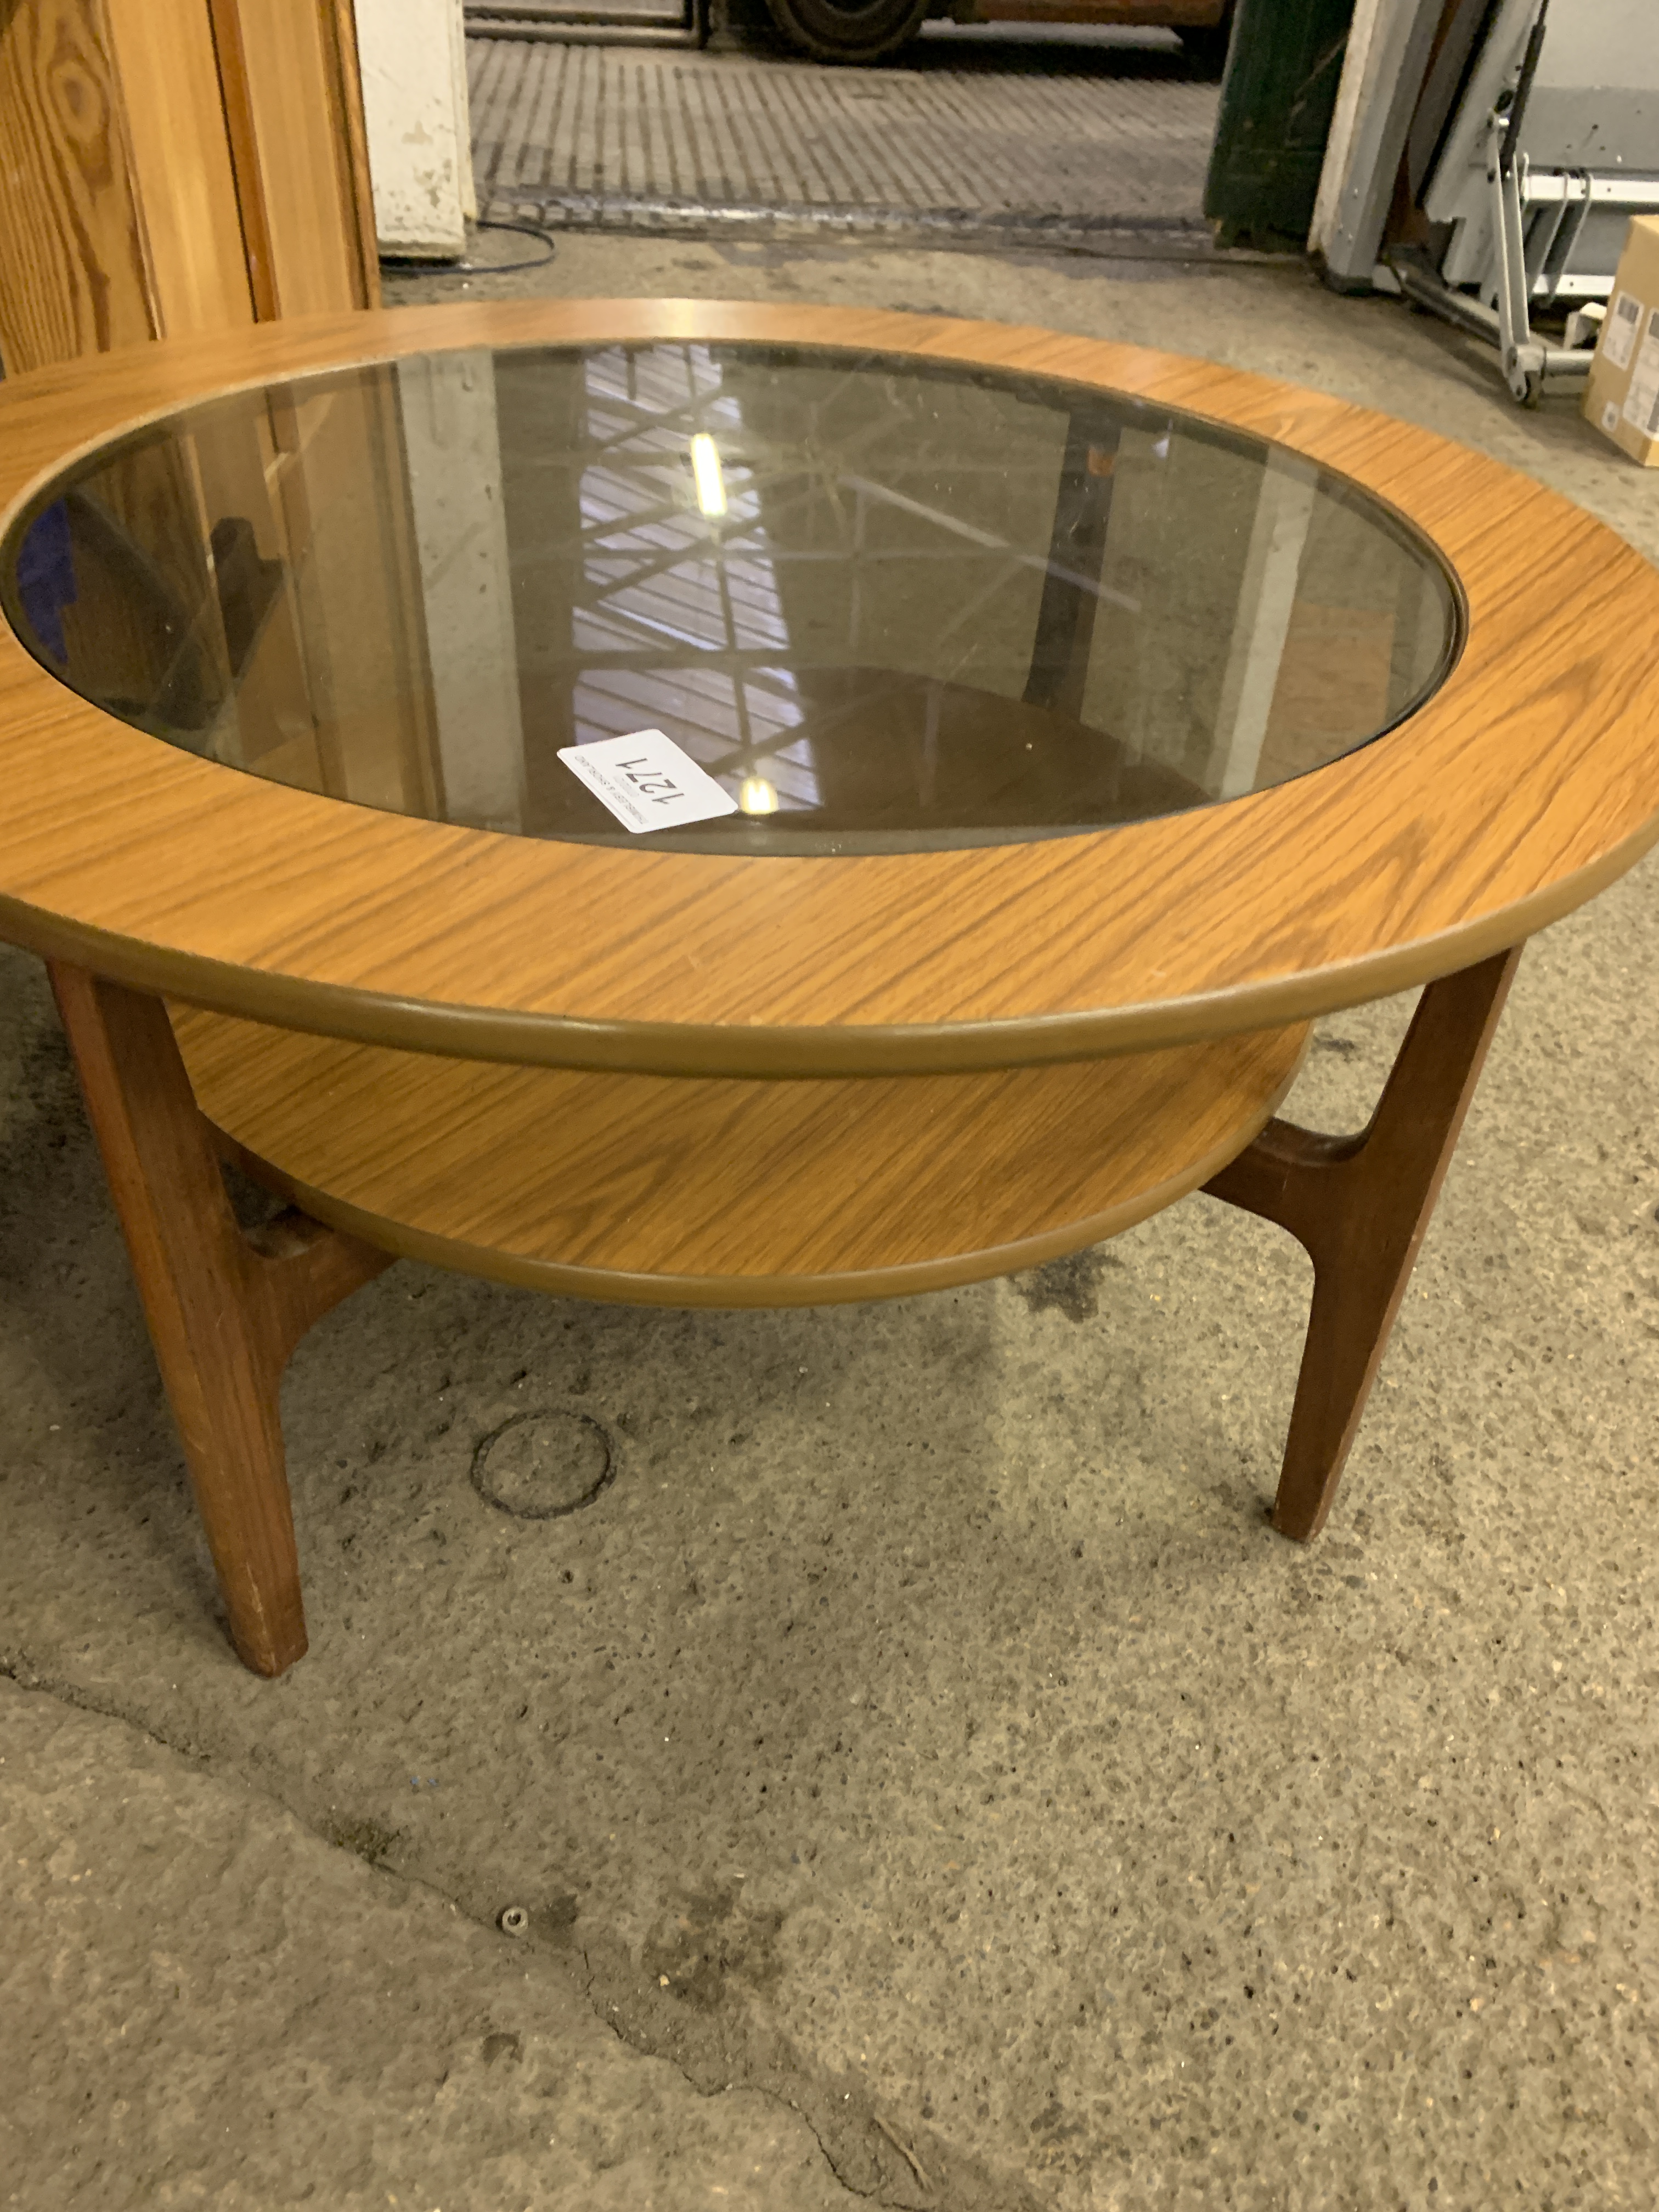 Retro style circular coffee table - Image 2 of 2